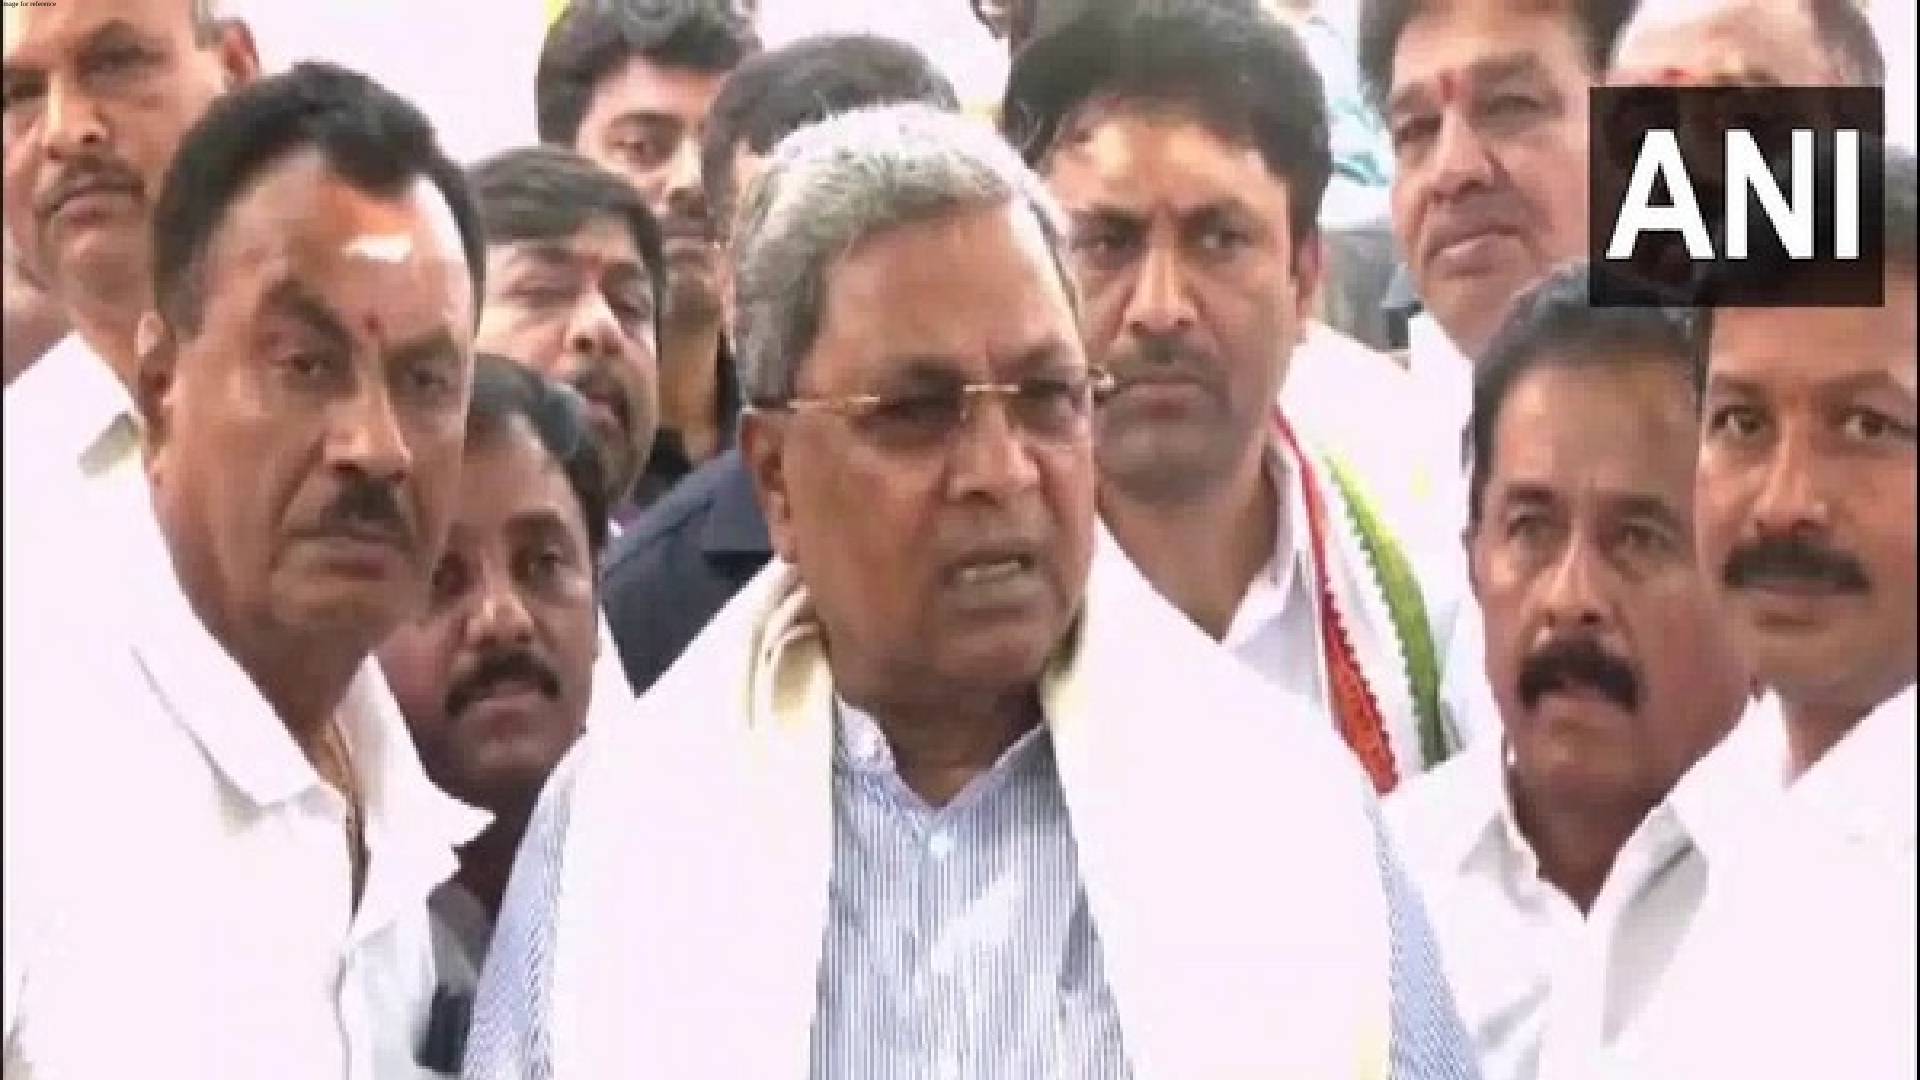 Bengaluru cafe blast: Karnataka CM Siddaramaiah assures action, urges opposition not to politicize